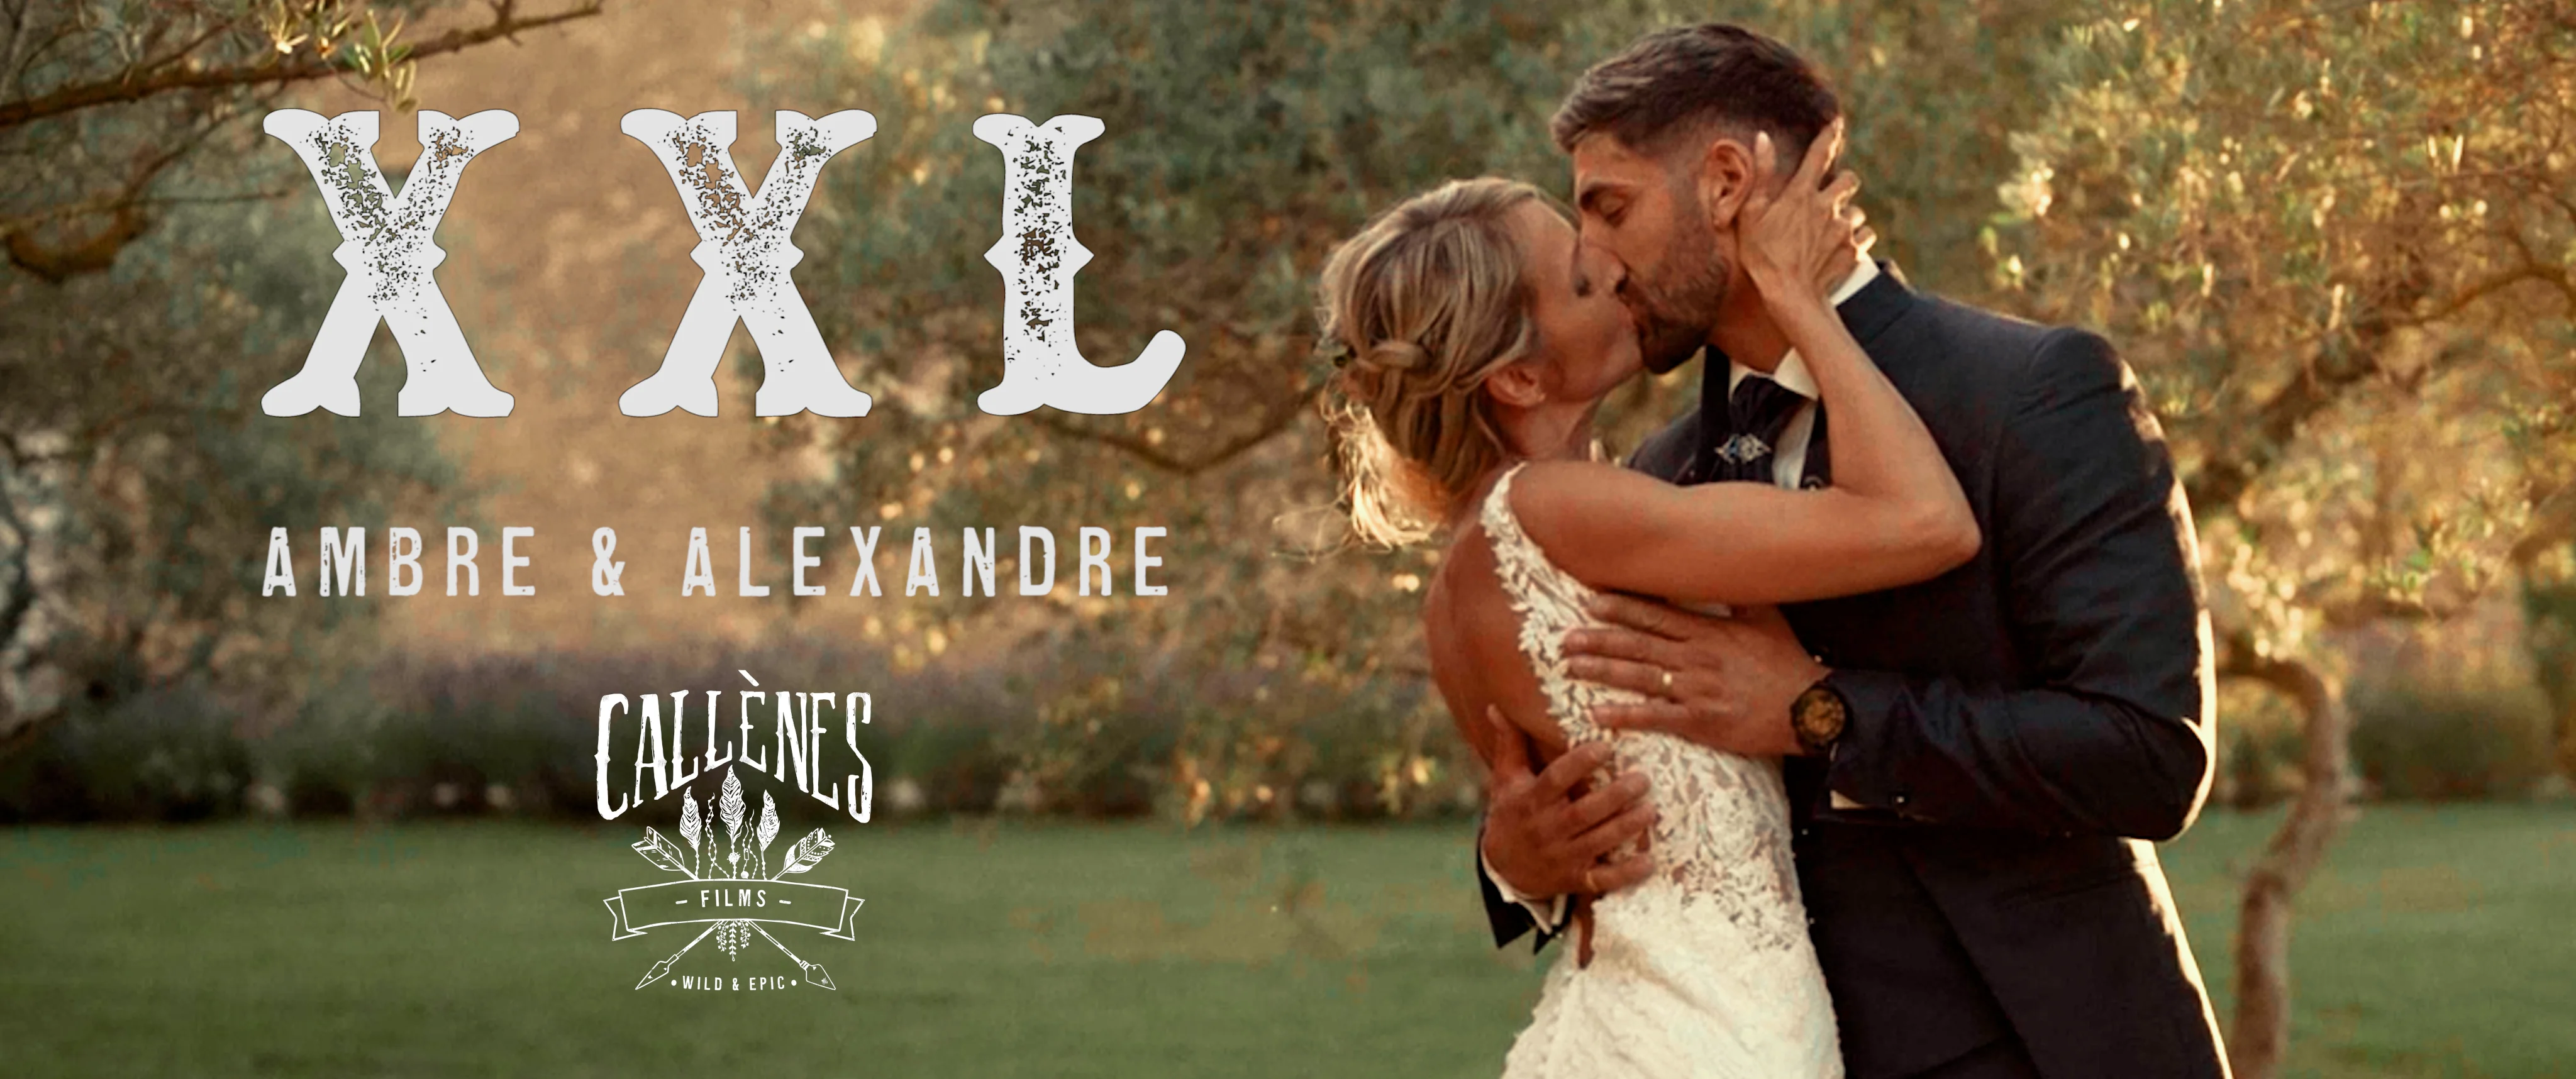 XXL - AMBRE & ALEXANDRE - CALLENES FILMS - on Vimeo